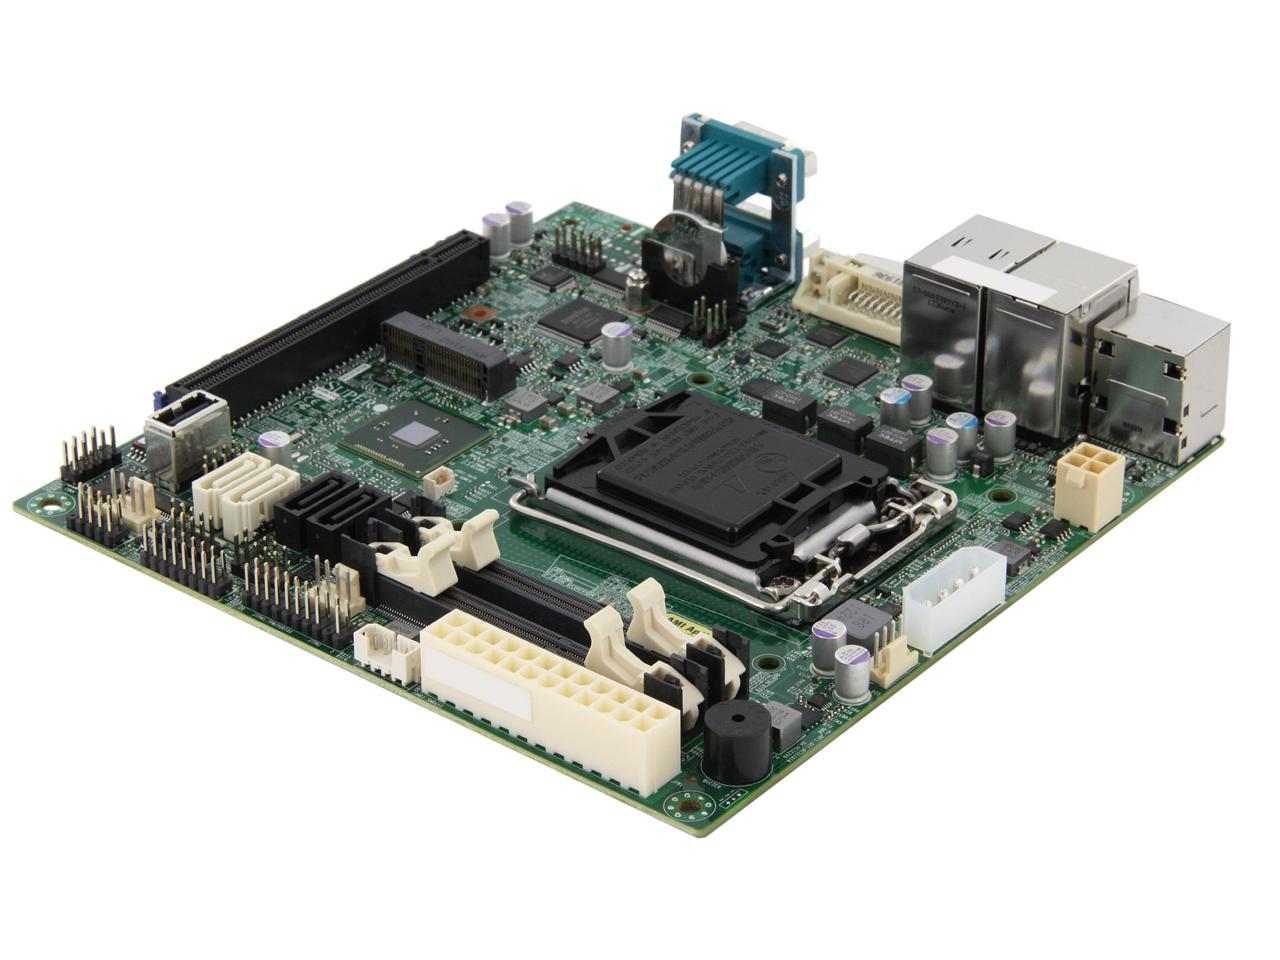 SUPERMICRO MBD-X10SLV-Q-O Mini ITX Server Motherboard LGA 1150 Intel Q87  DDR3 1600